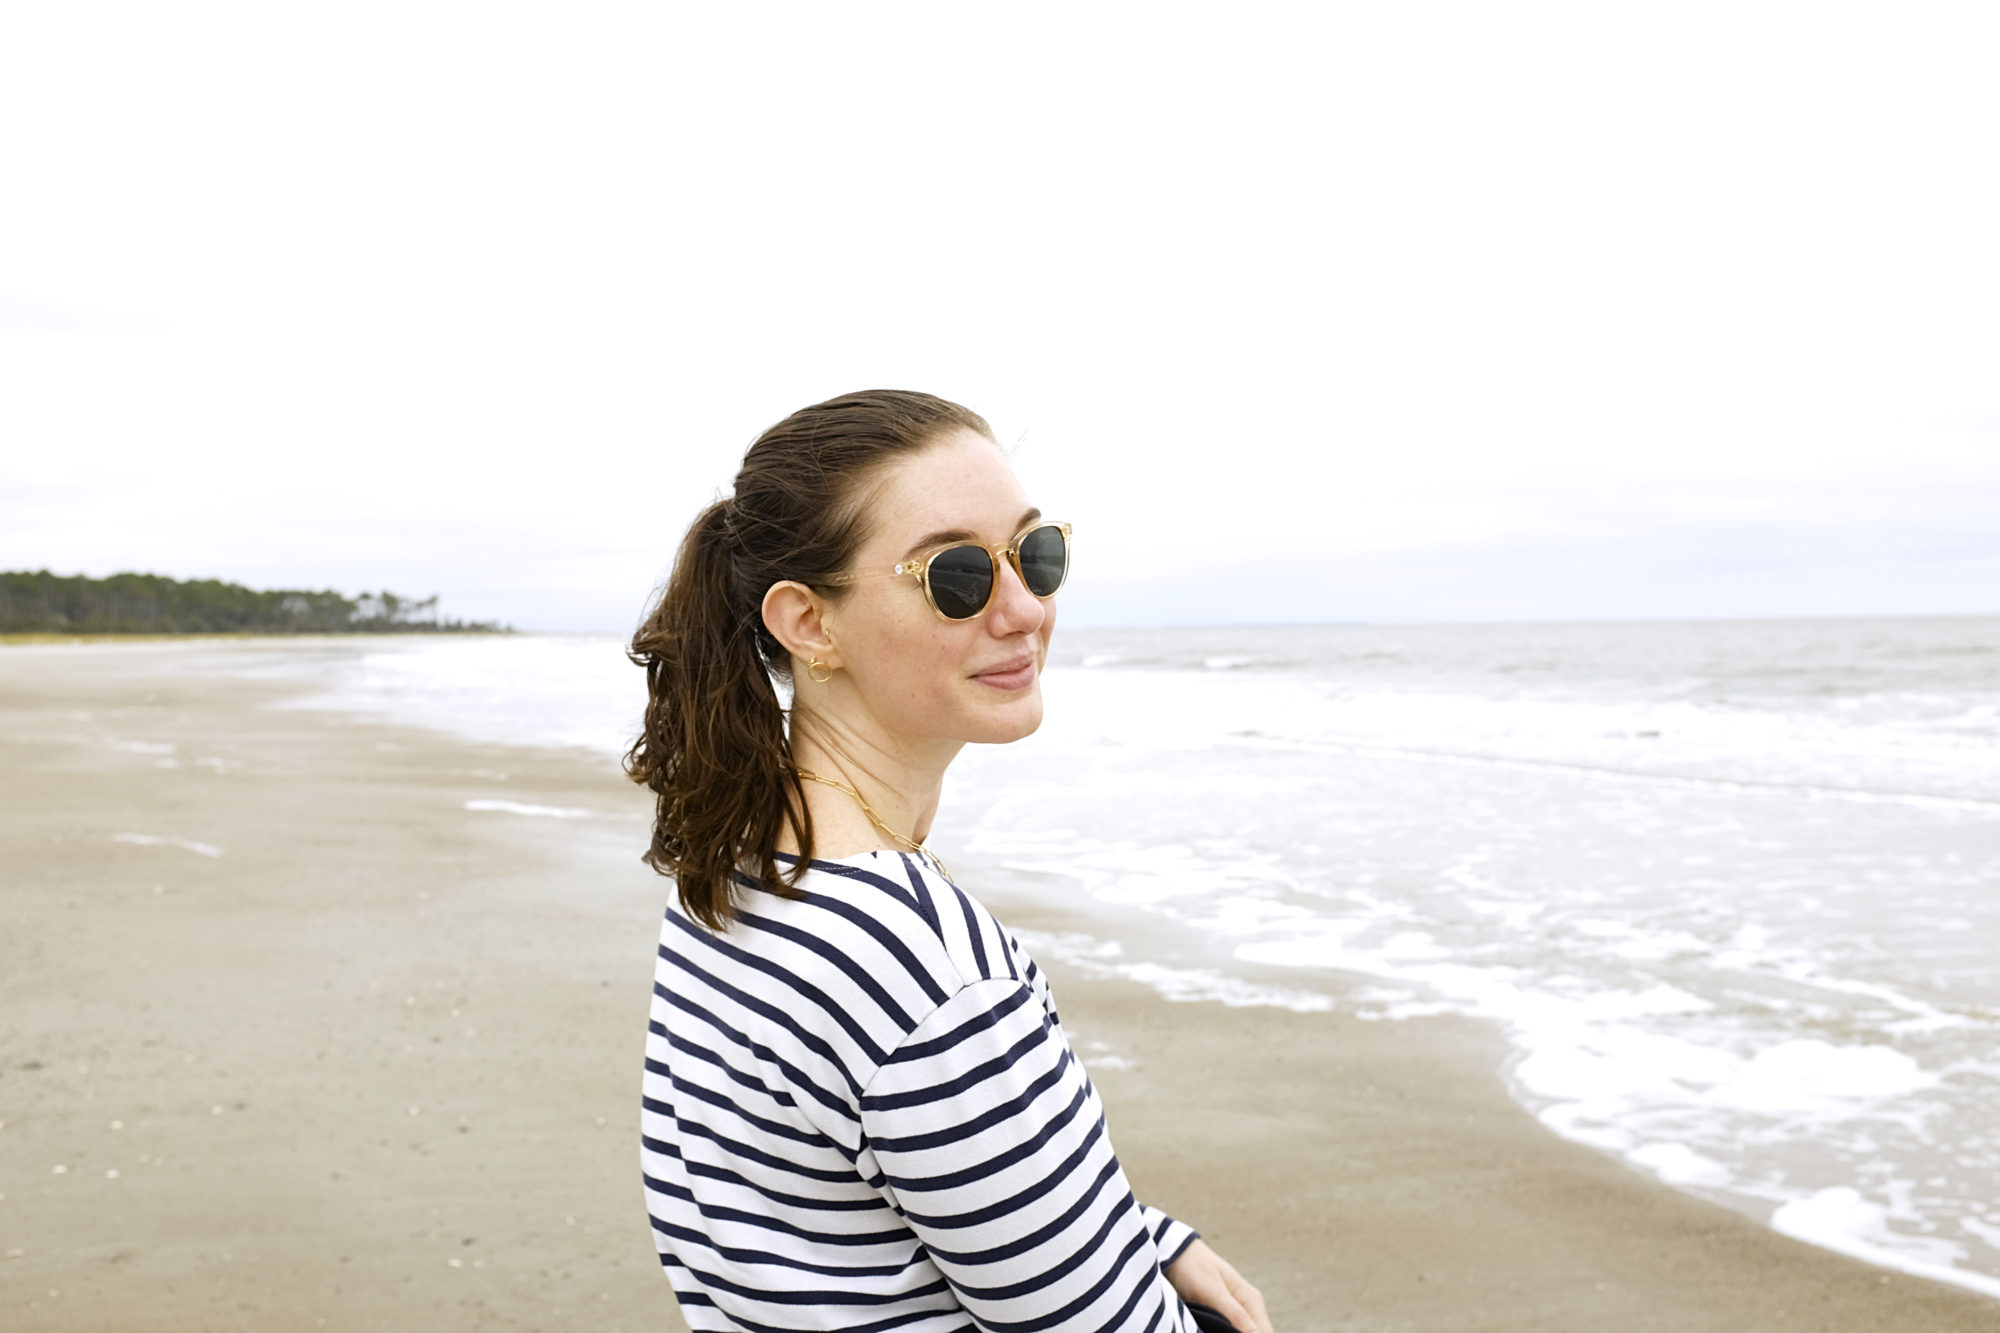 Alyssa wears a striped shirt on the beach